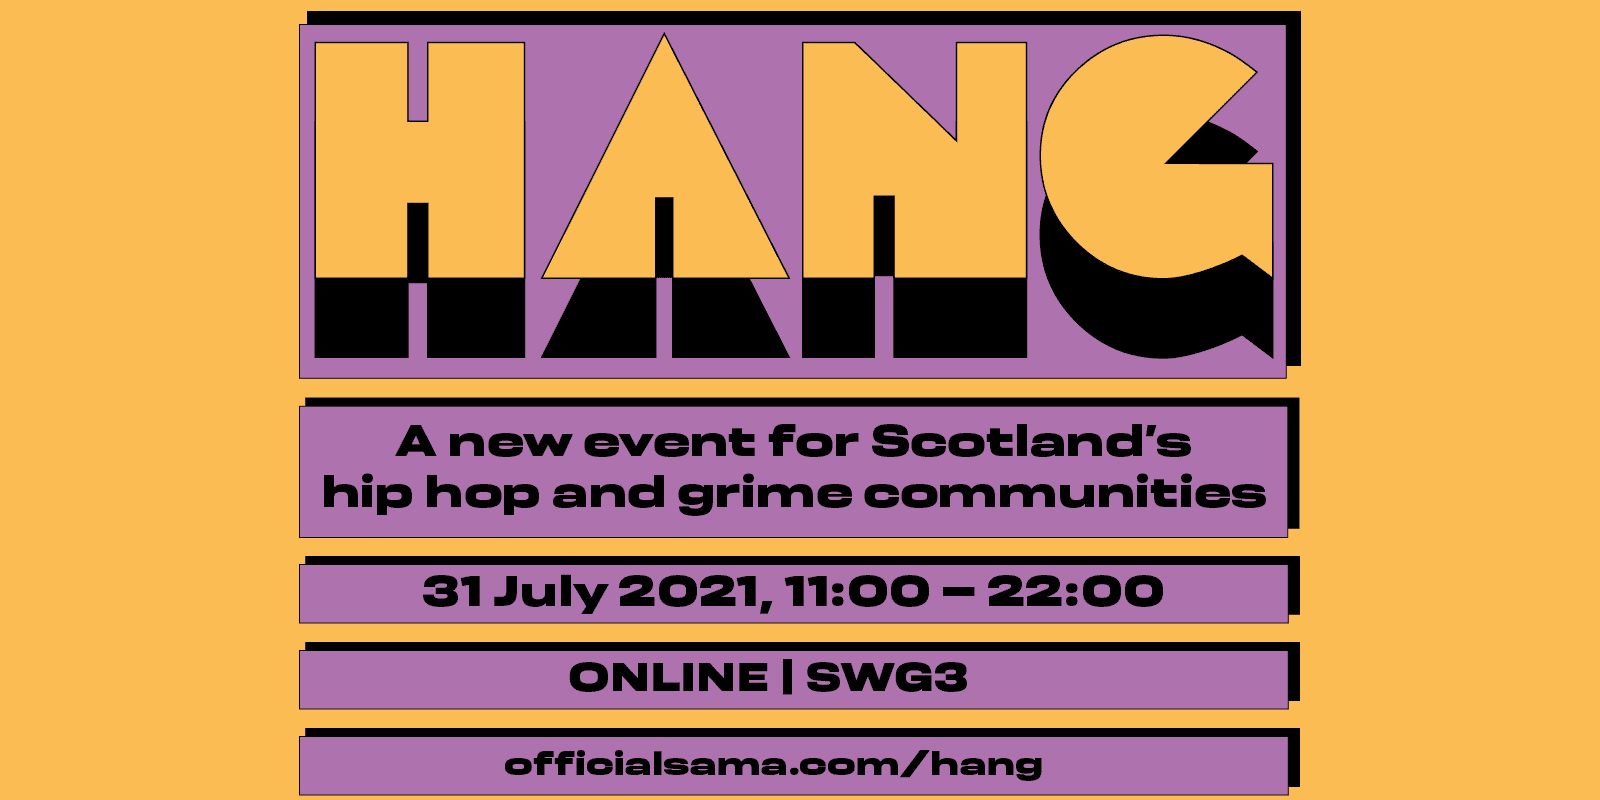 HANG Hip hop grime conference scotland